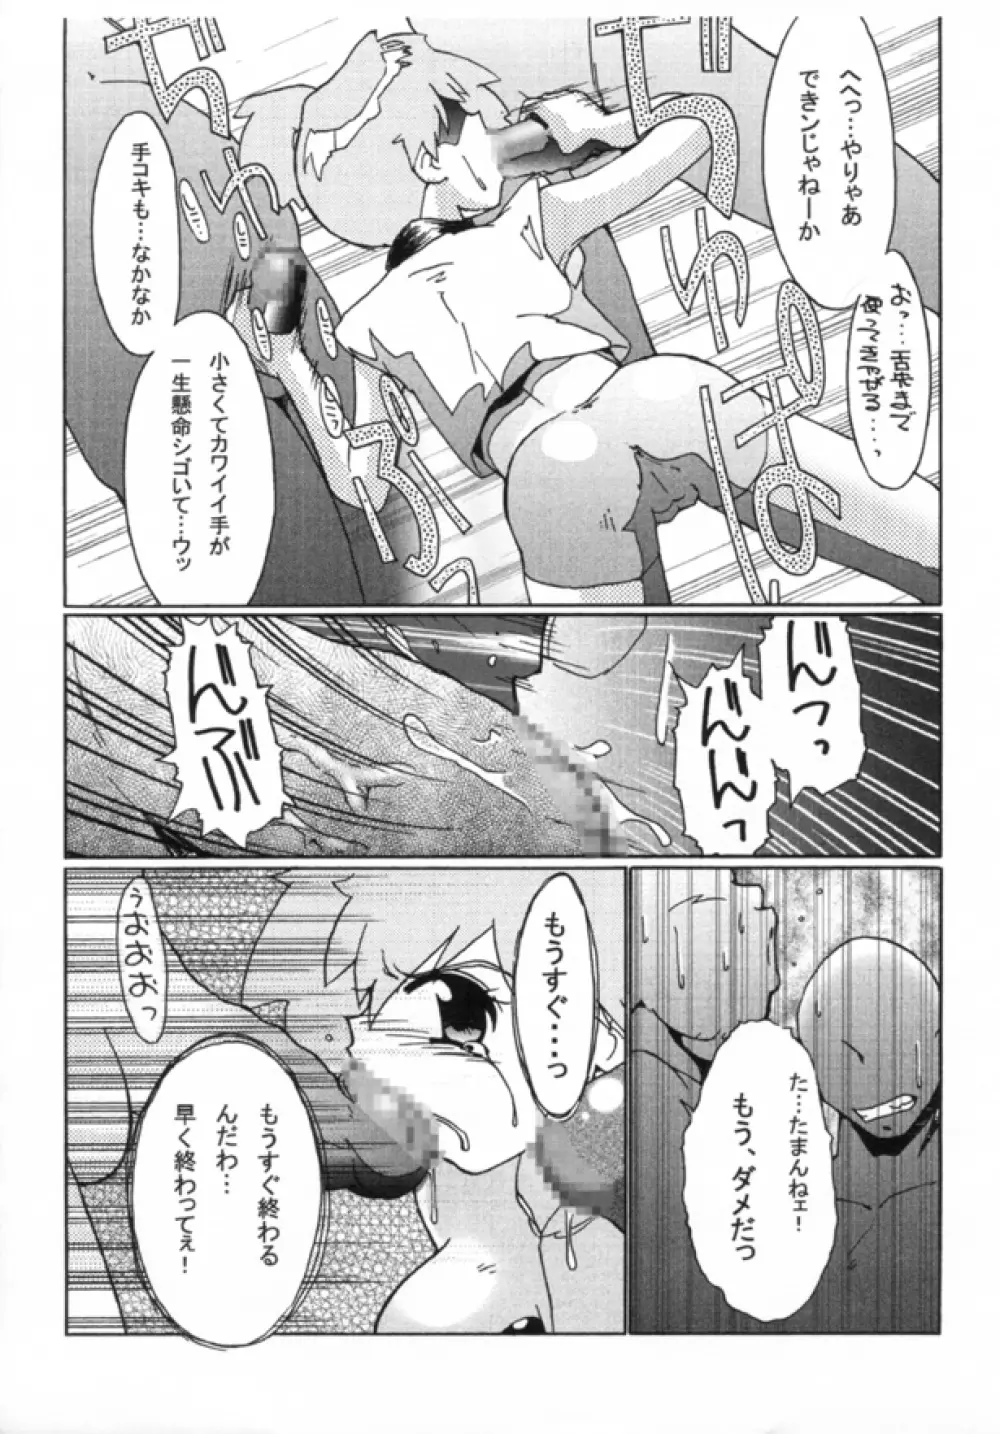 KASUMIX XPLOSION Kasumi Comic part5 - page45